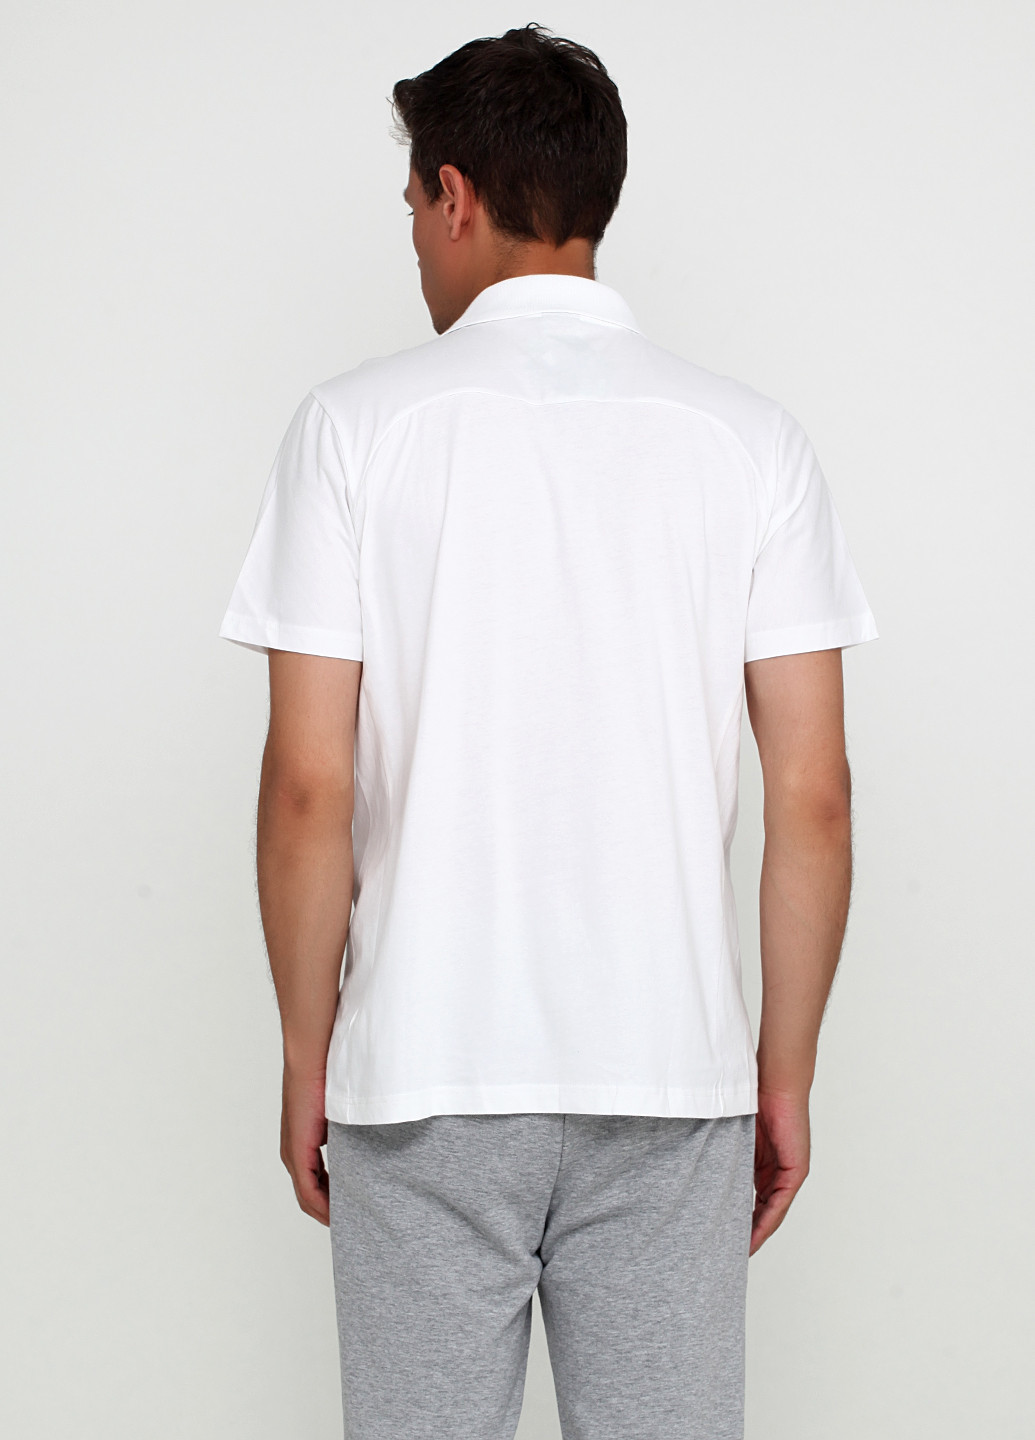 Белая футболка-поло для мужчин Puma с логотипом